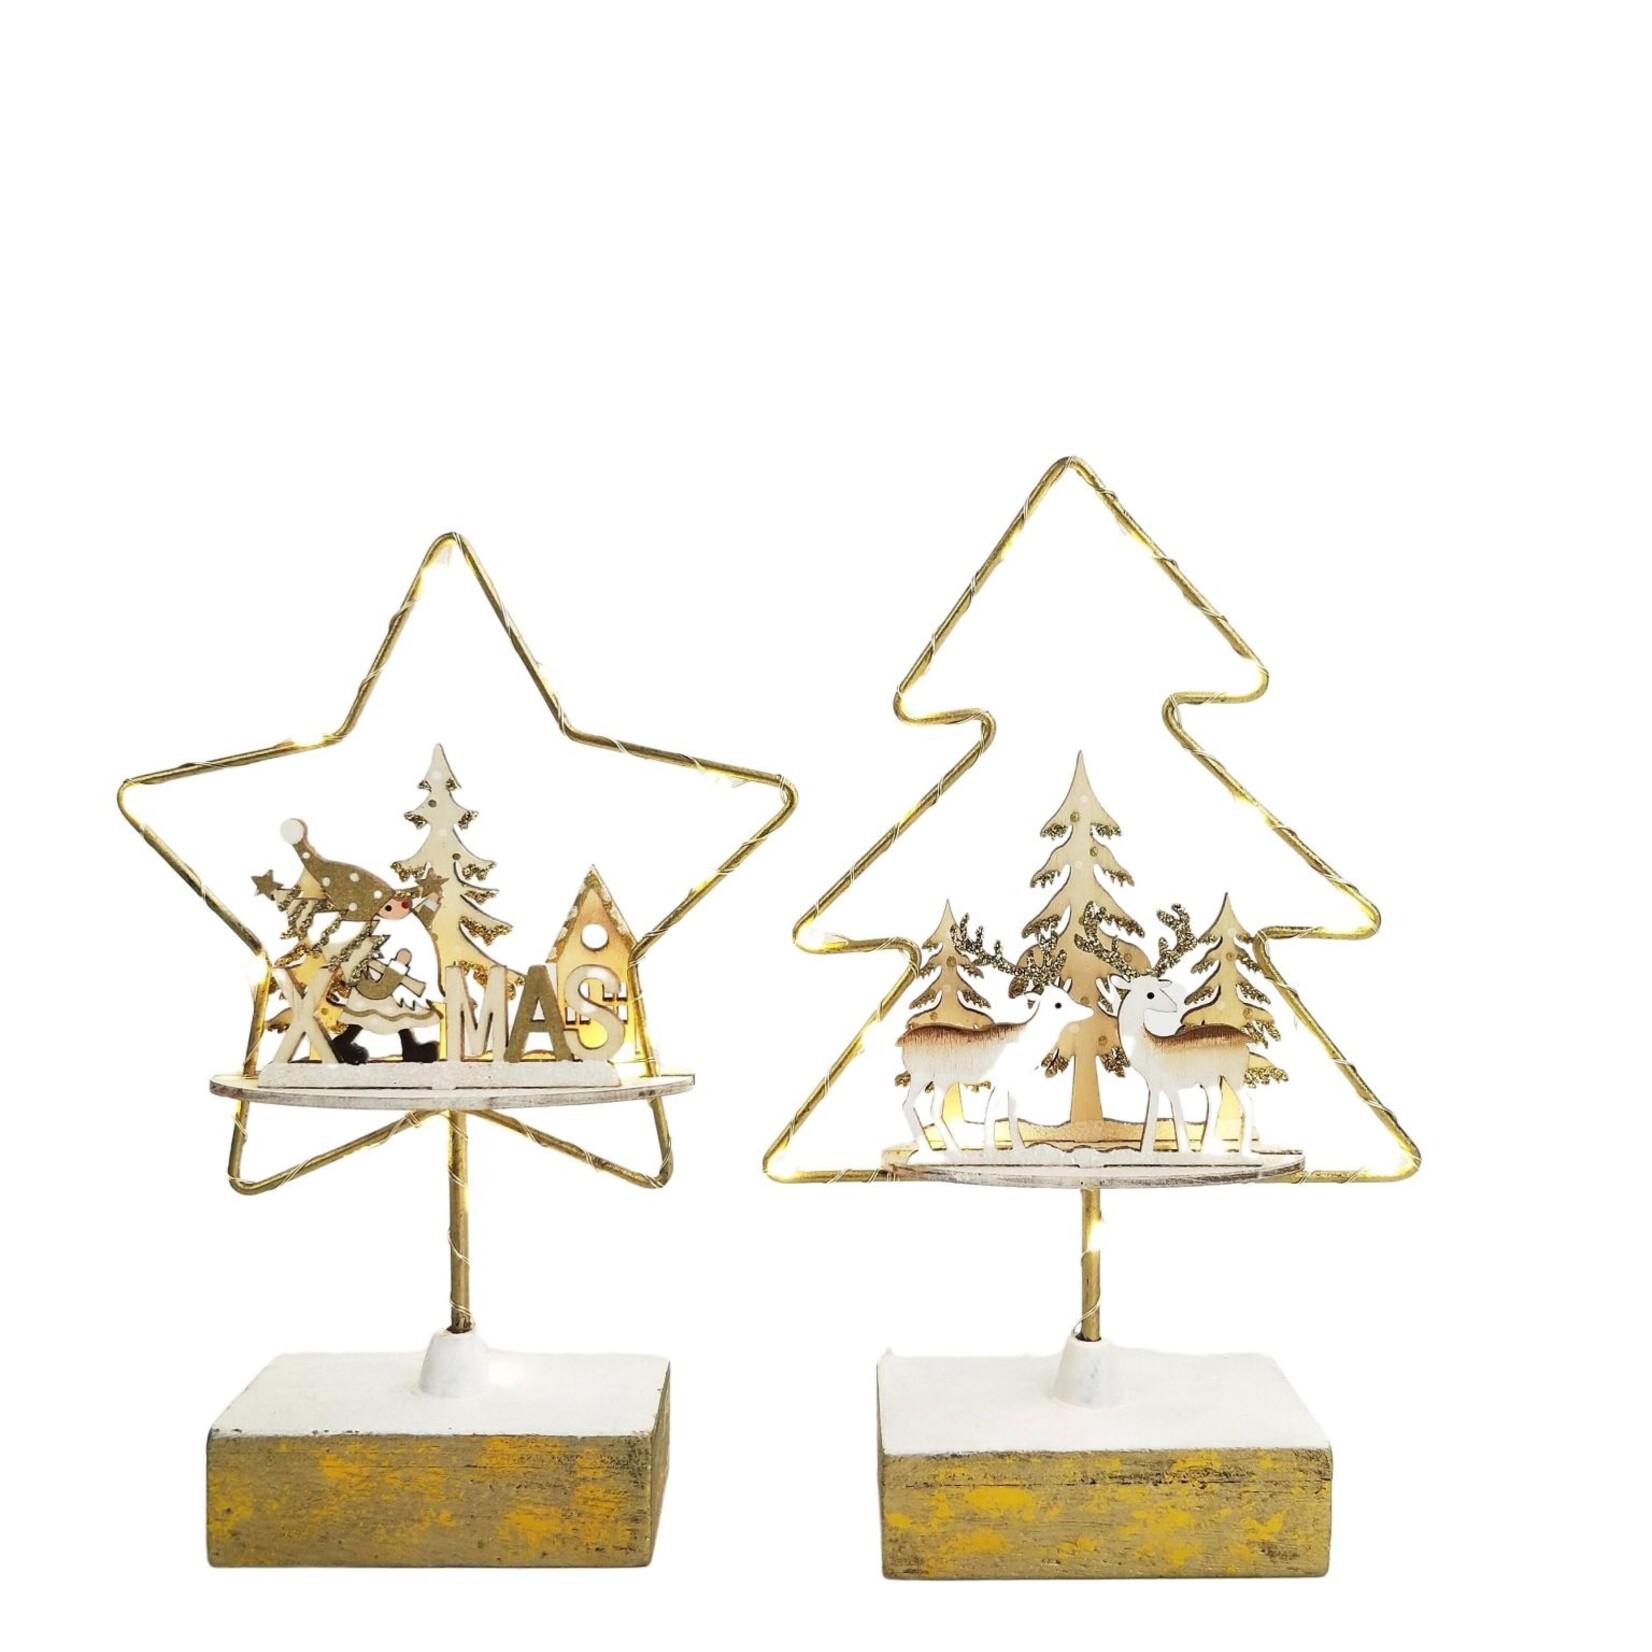 Santa & Reindeer Scenes in Star & Tree with Lights Decoration White & Gold 21cm (2 Asst random selection)